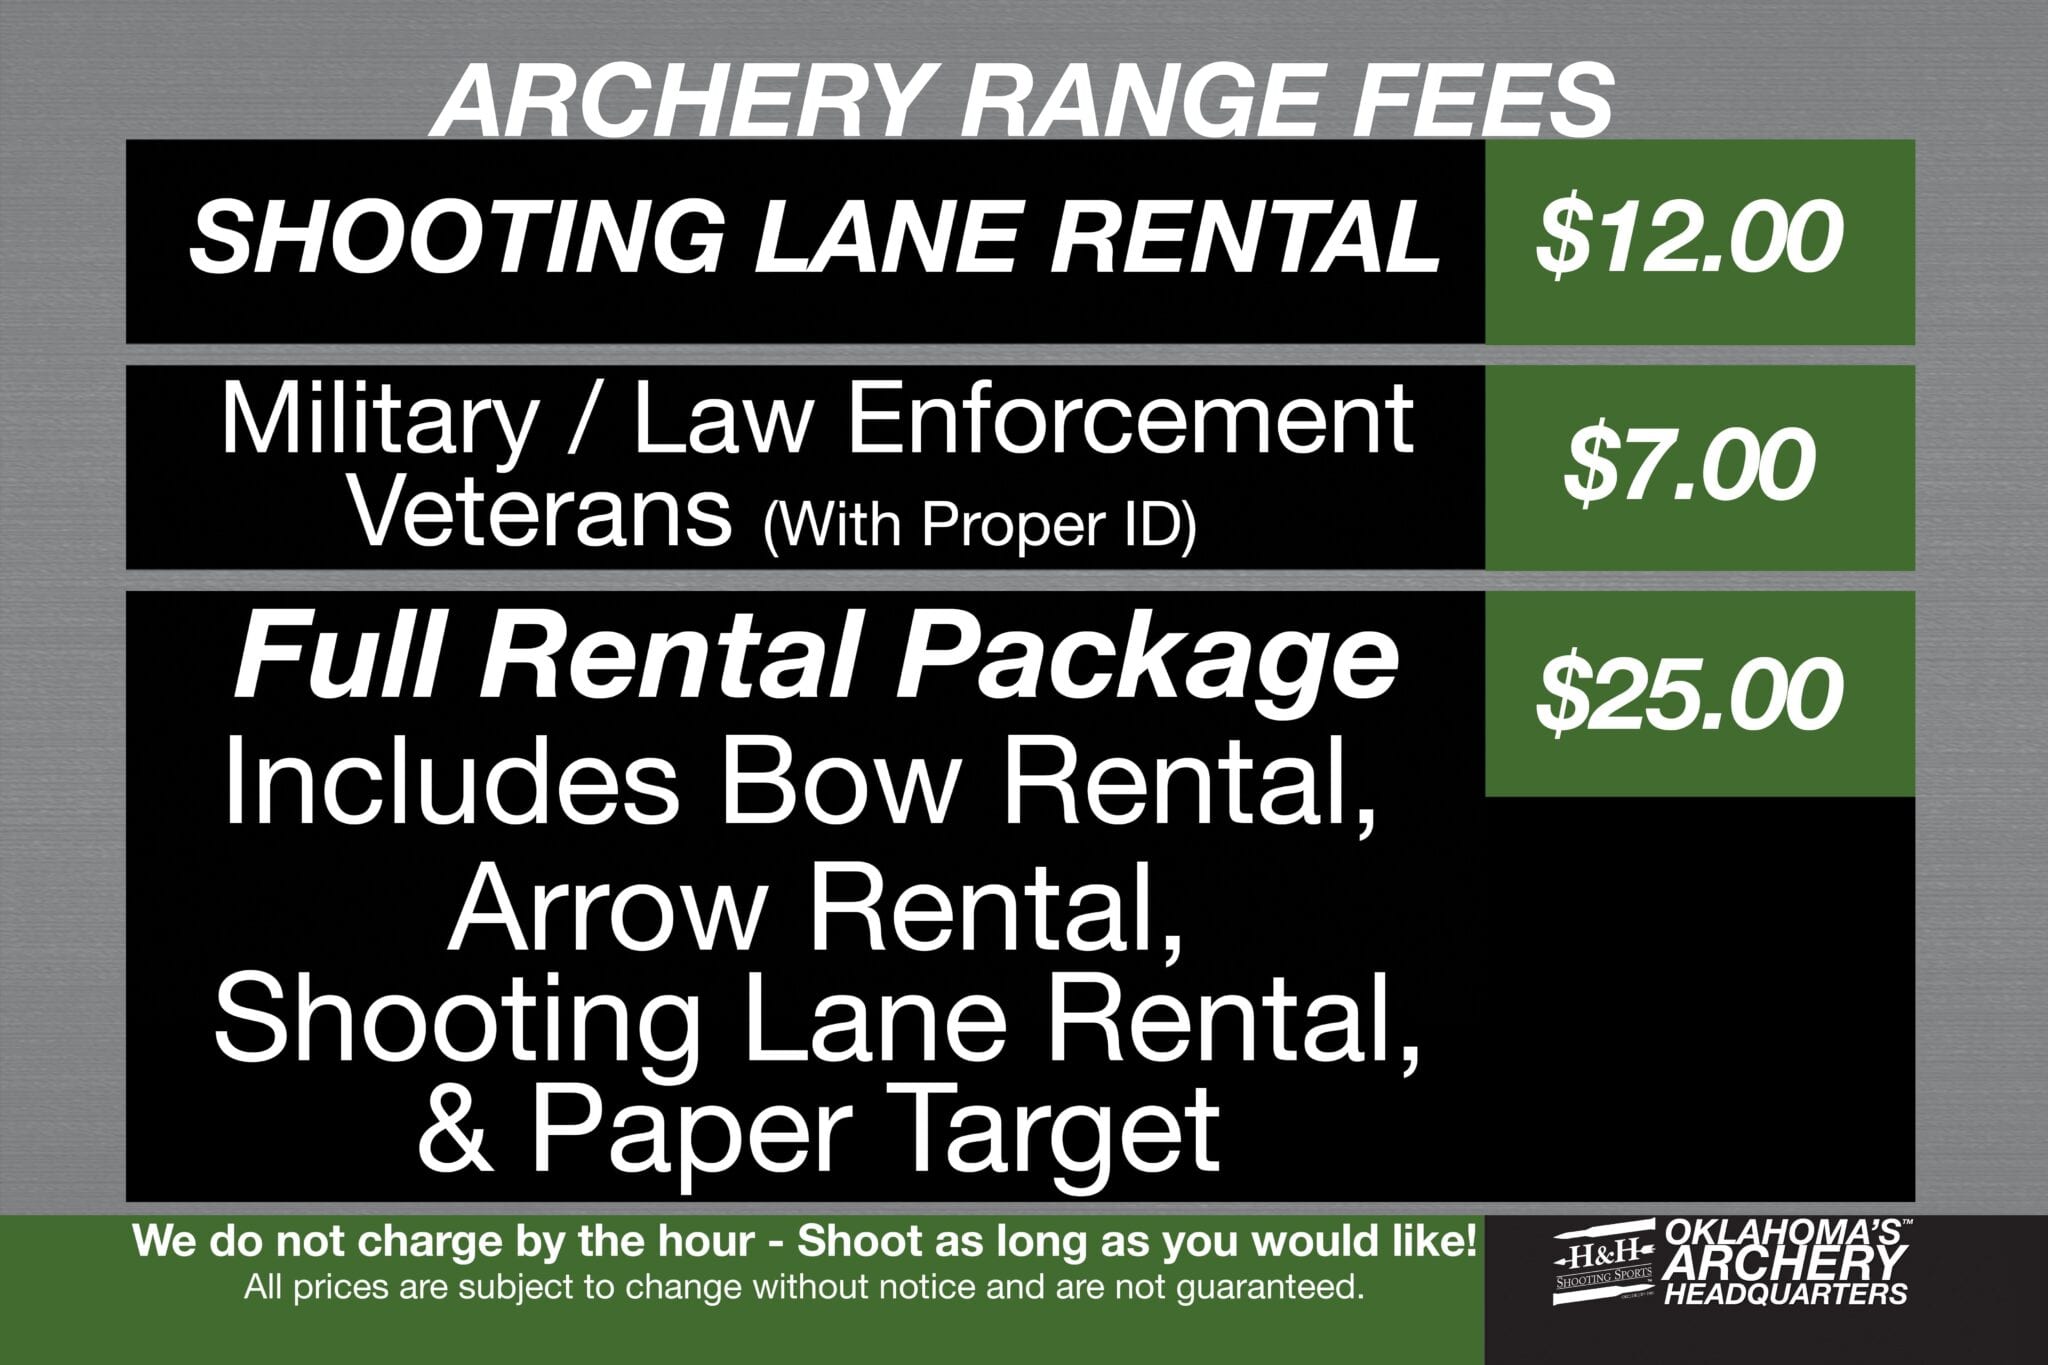 Archery Range Fees